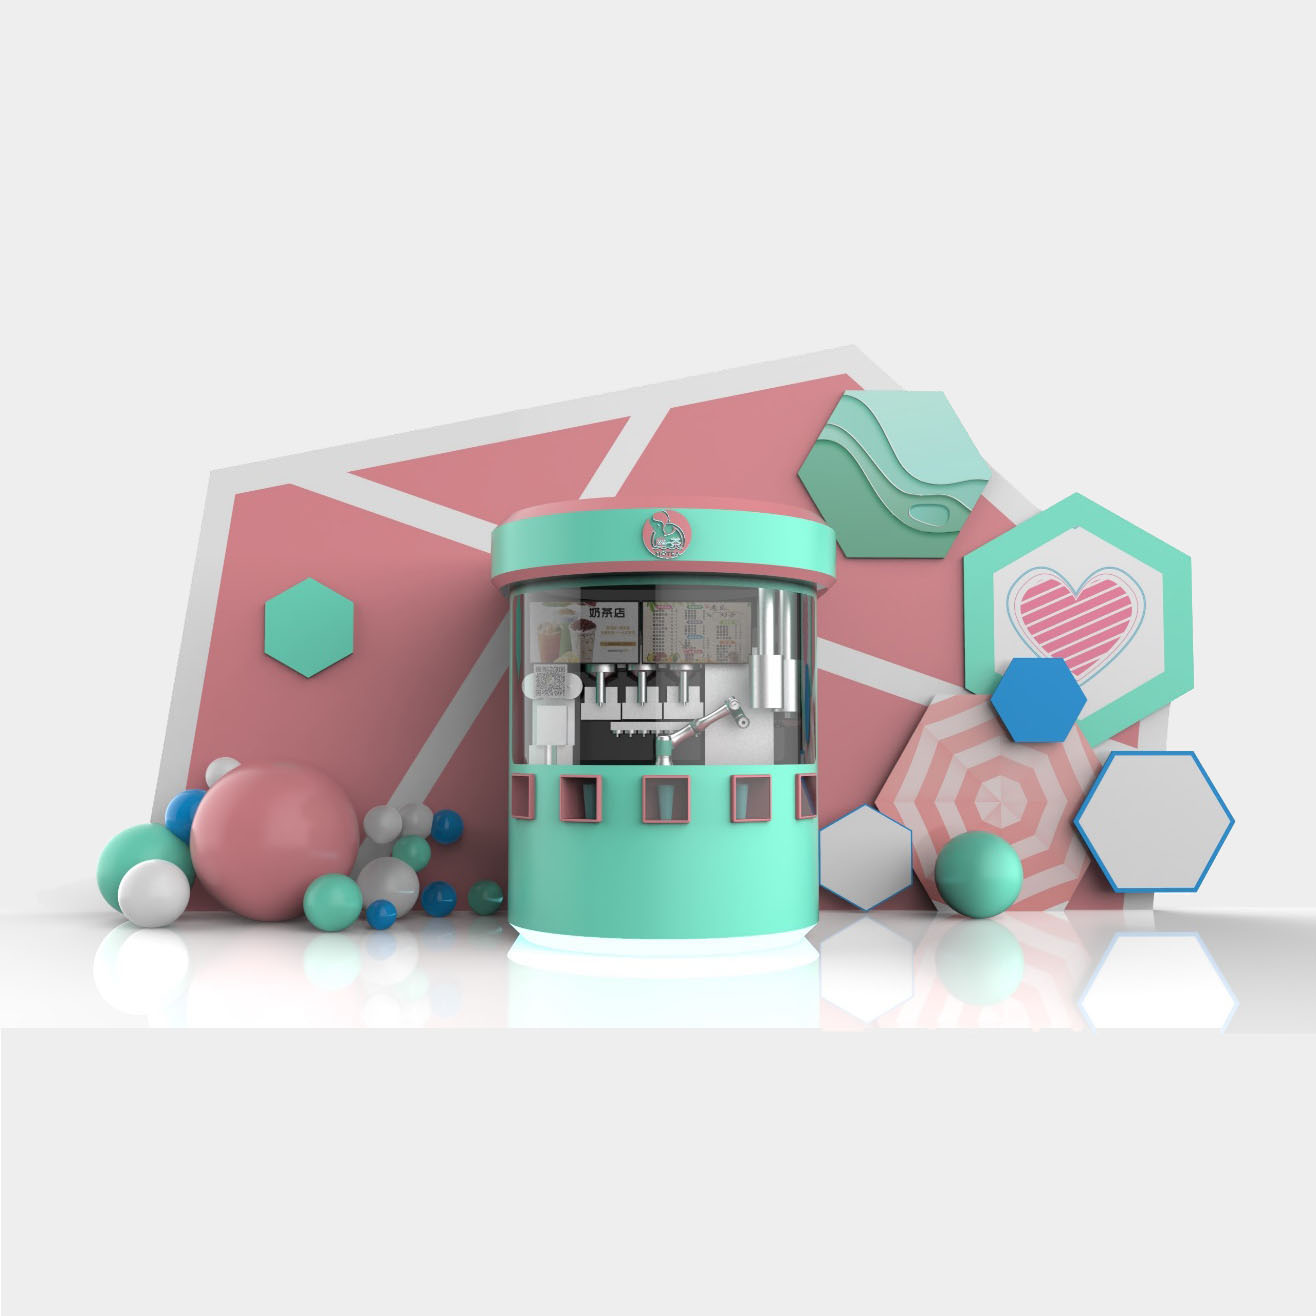 New Fashion Robot Milk Tea Kiosk For Indoor Application Scenarios Featured Image